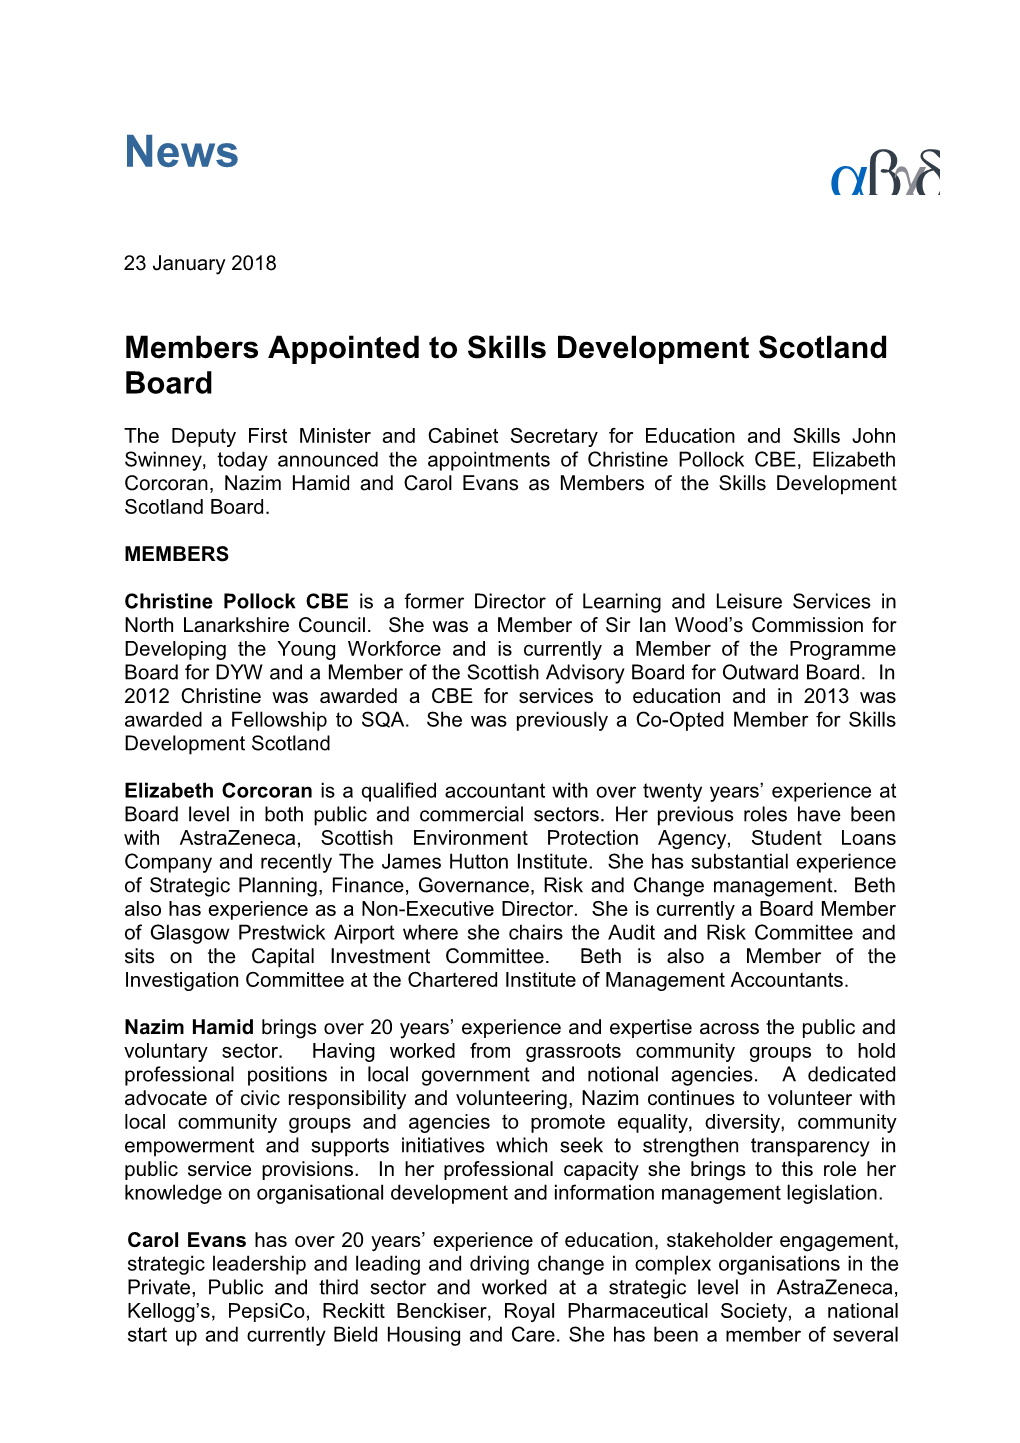 Membersappointed to Skills Development Scotland Board